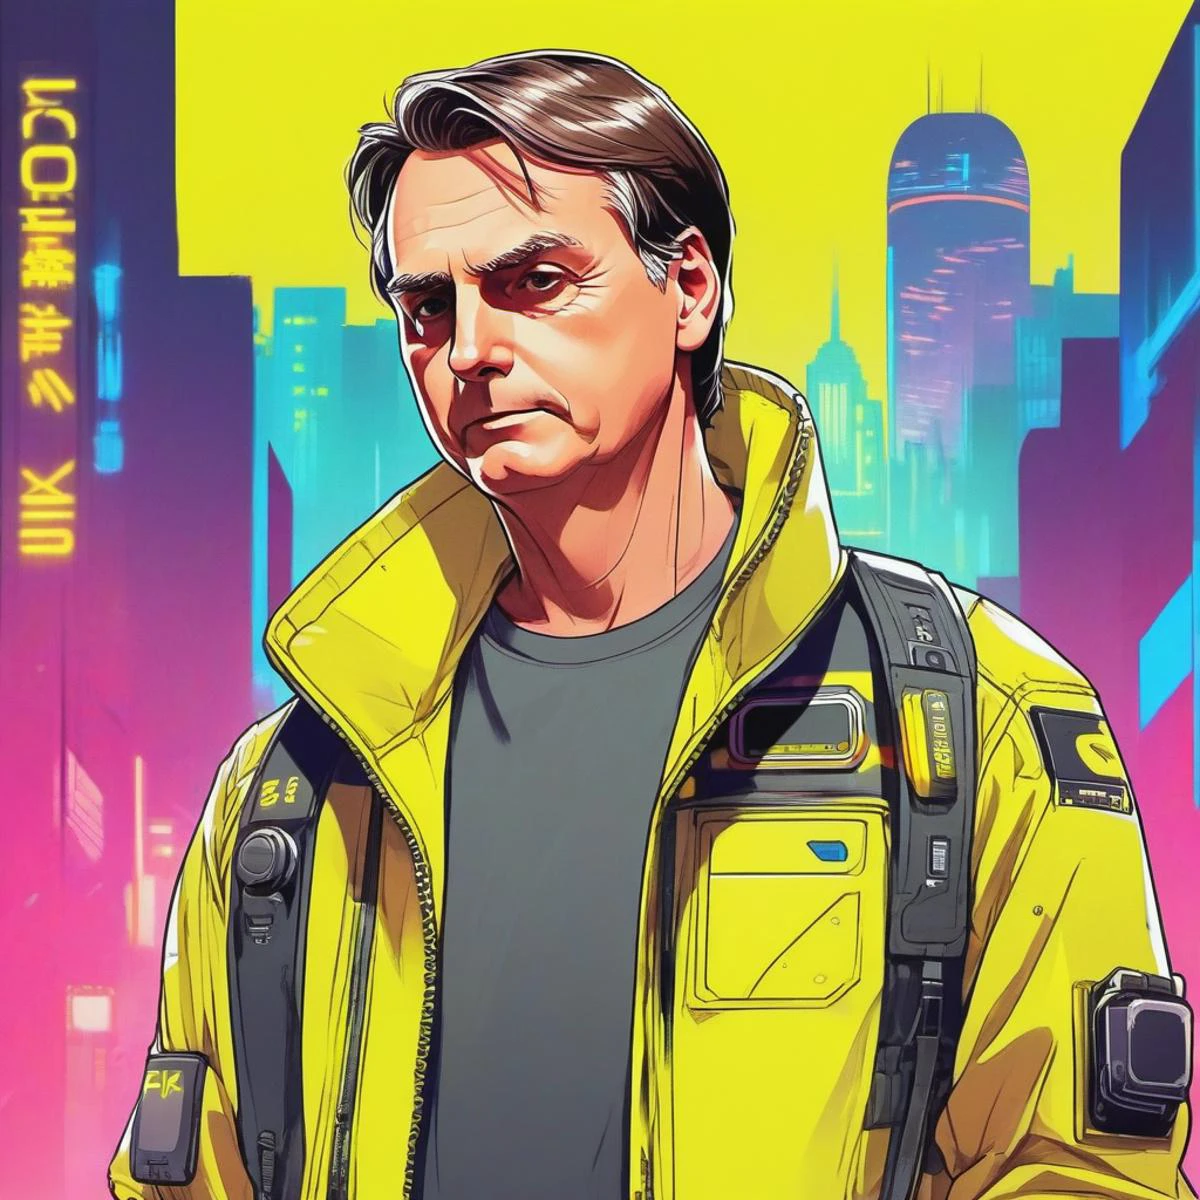 "ciberpunk, bolsonaro man, Rosto neutro, ciberpunk yellow jacket, fundo neon simples, cinematic, 2d, manga, QG, (ciberpunk edgerunners style:1.1), in a ciberpunk outfit. futurista